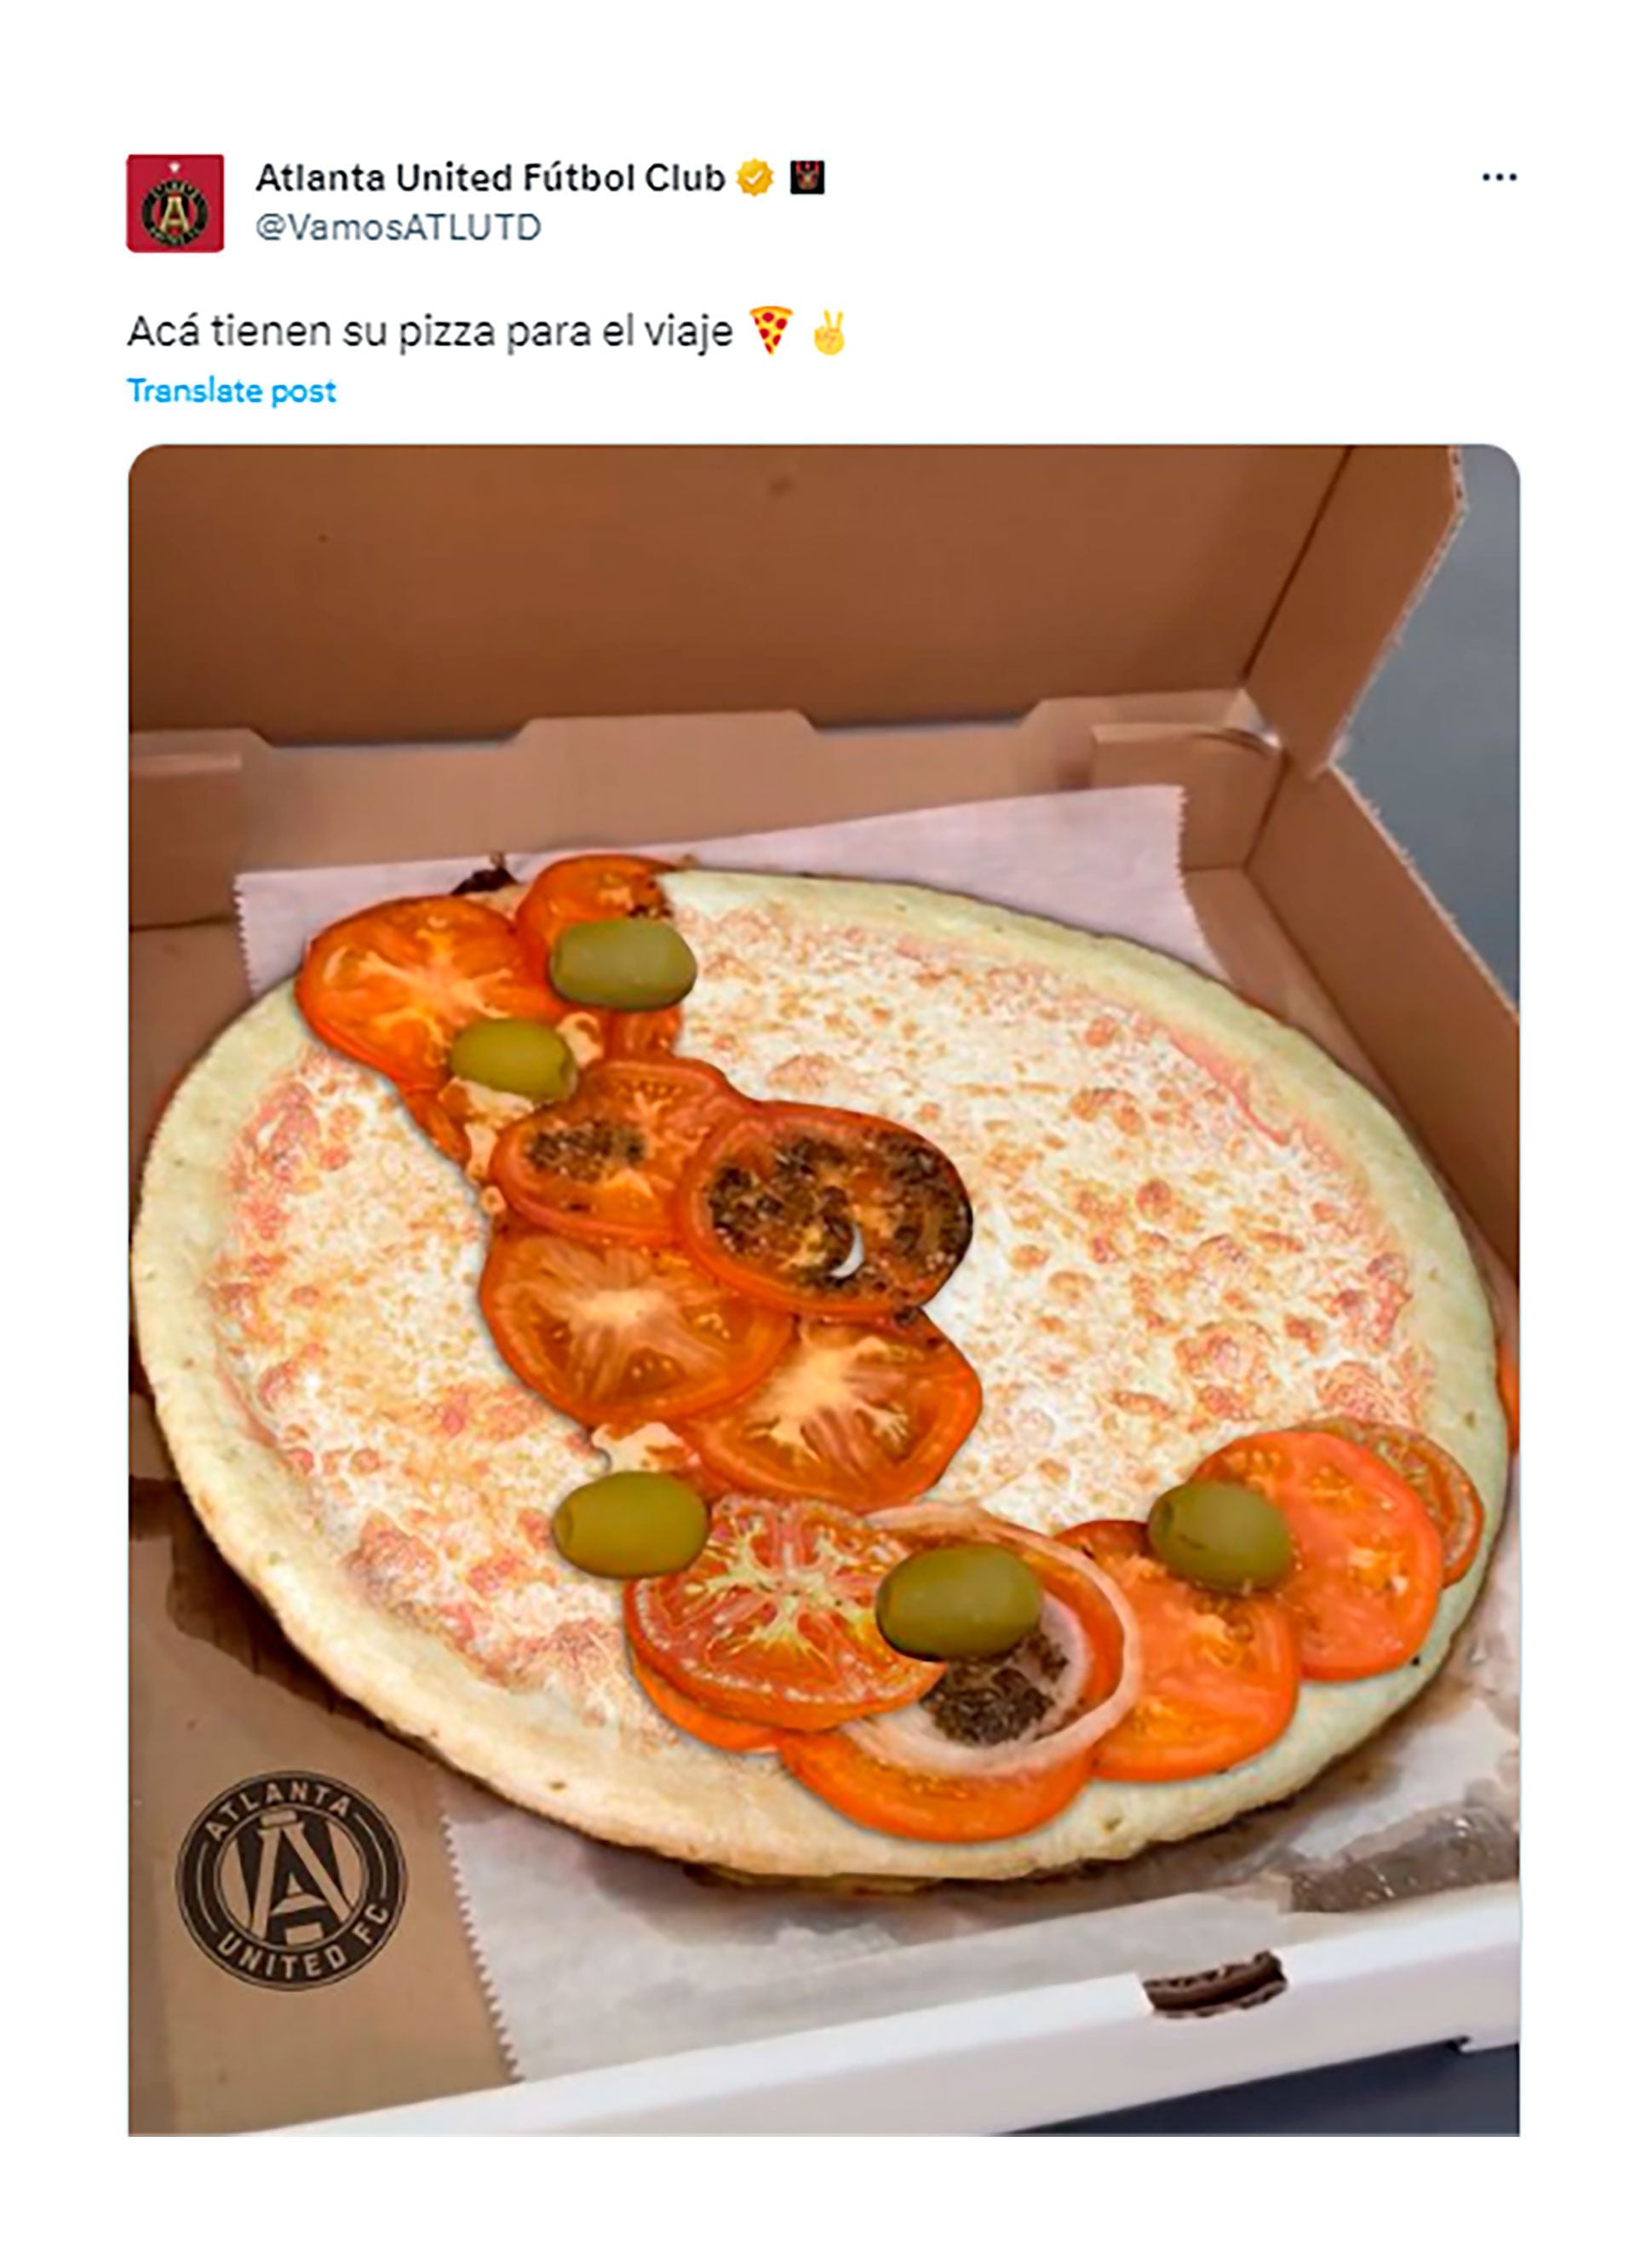 La Pizza en forma de L